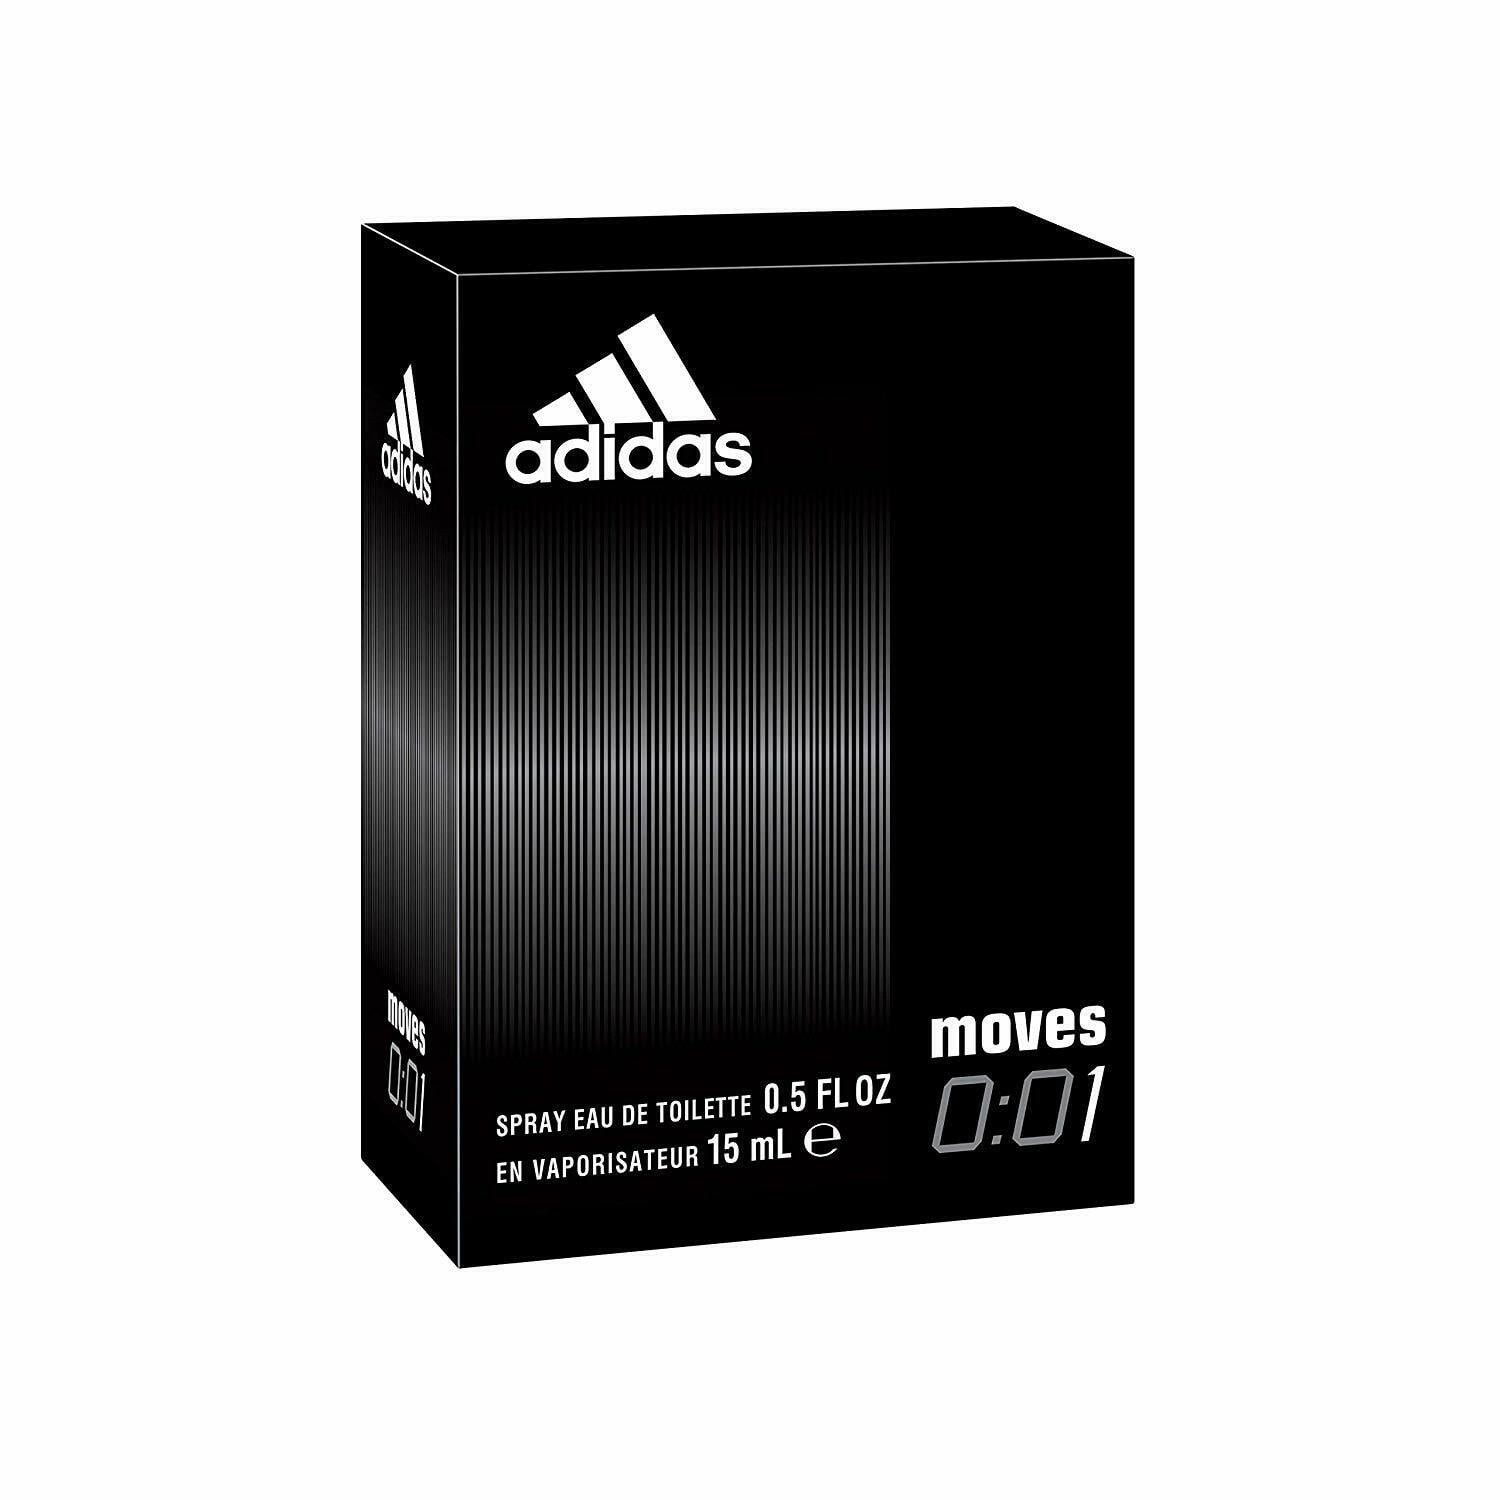 Adidas Moves 0:01 Eau De Toilette Spray .5 oz. Men new in Box - Walmart.com